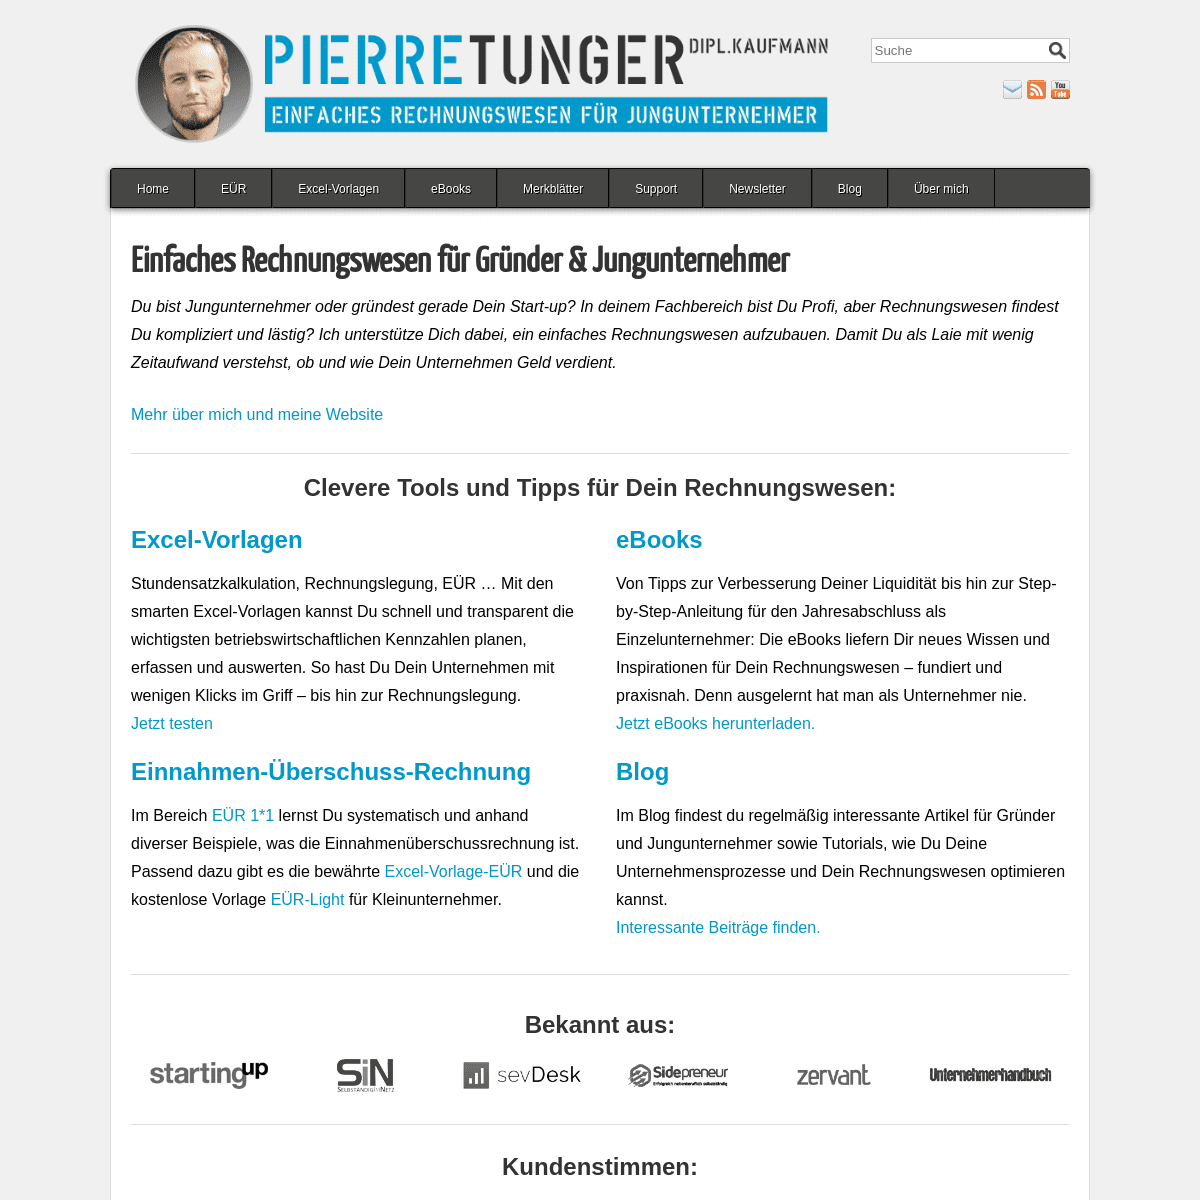 A complete backup of pierretunger.com